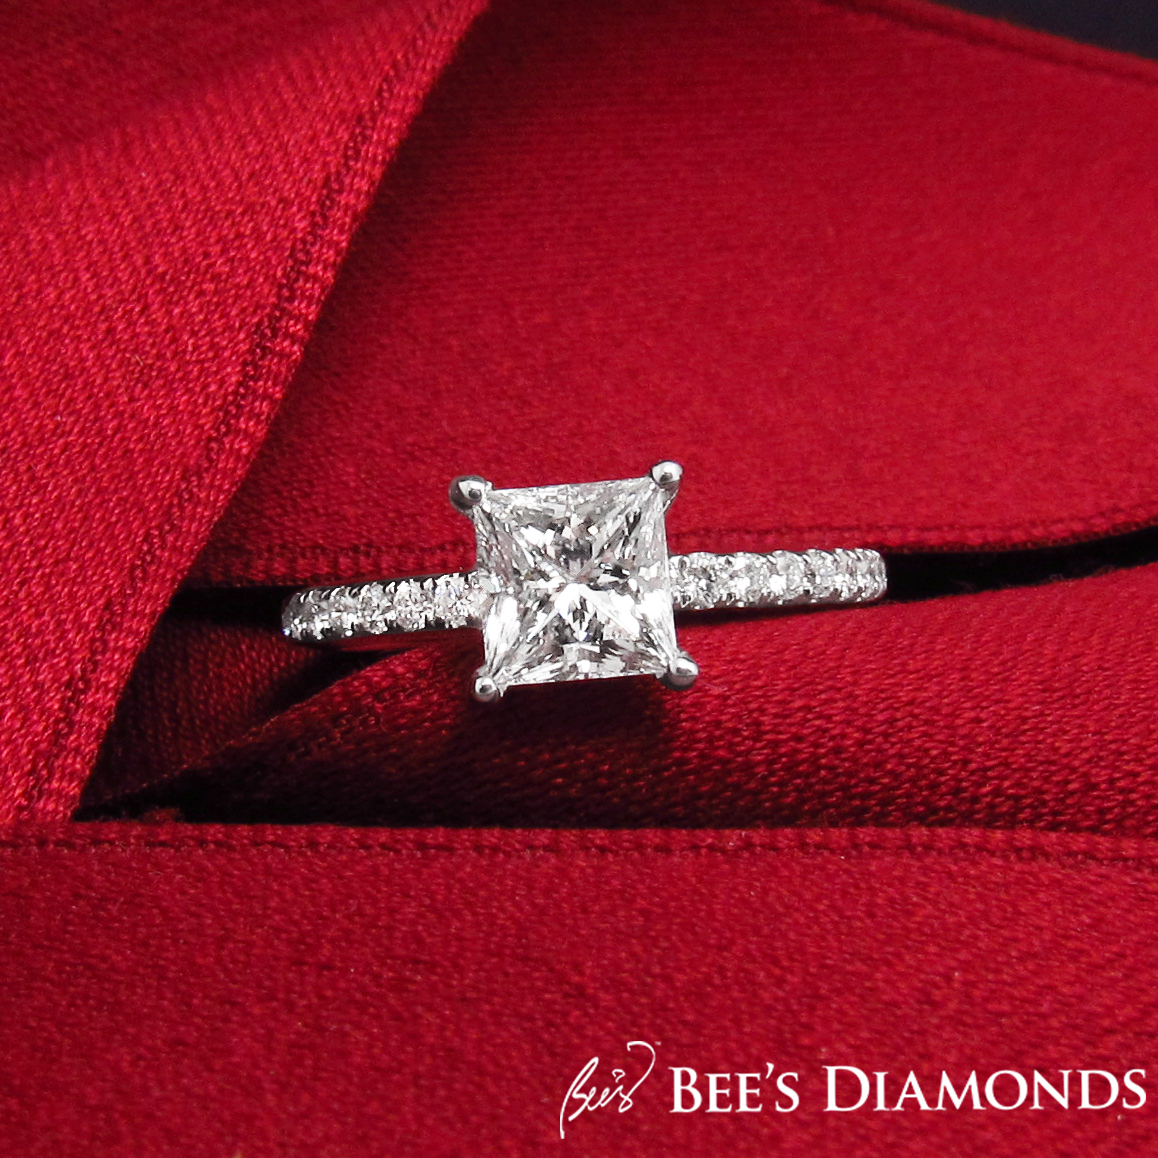 Princess cut engagement diamond ring | Bee's Diamonds